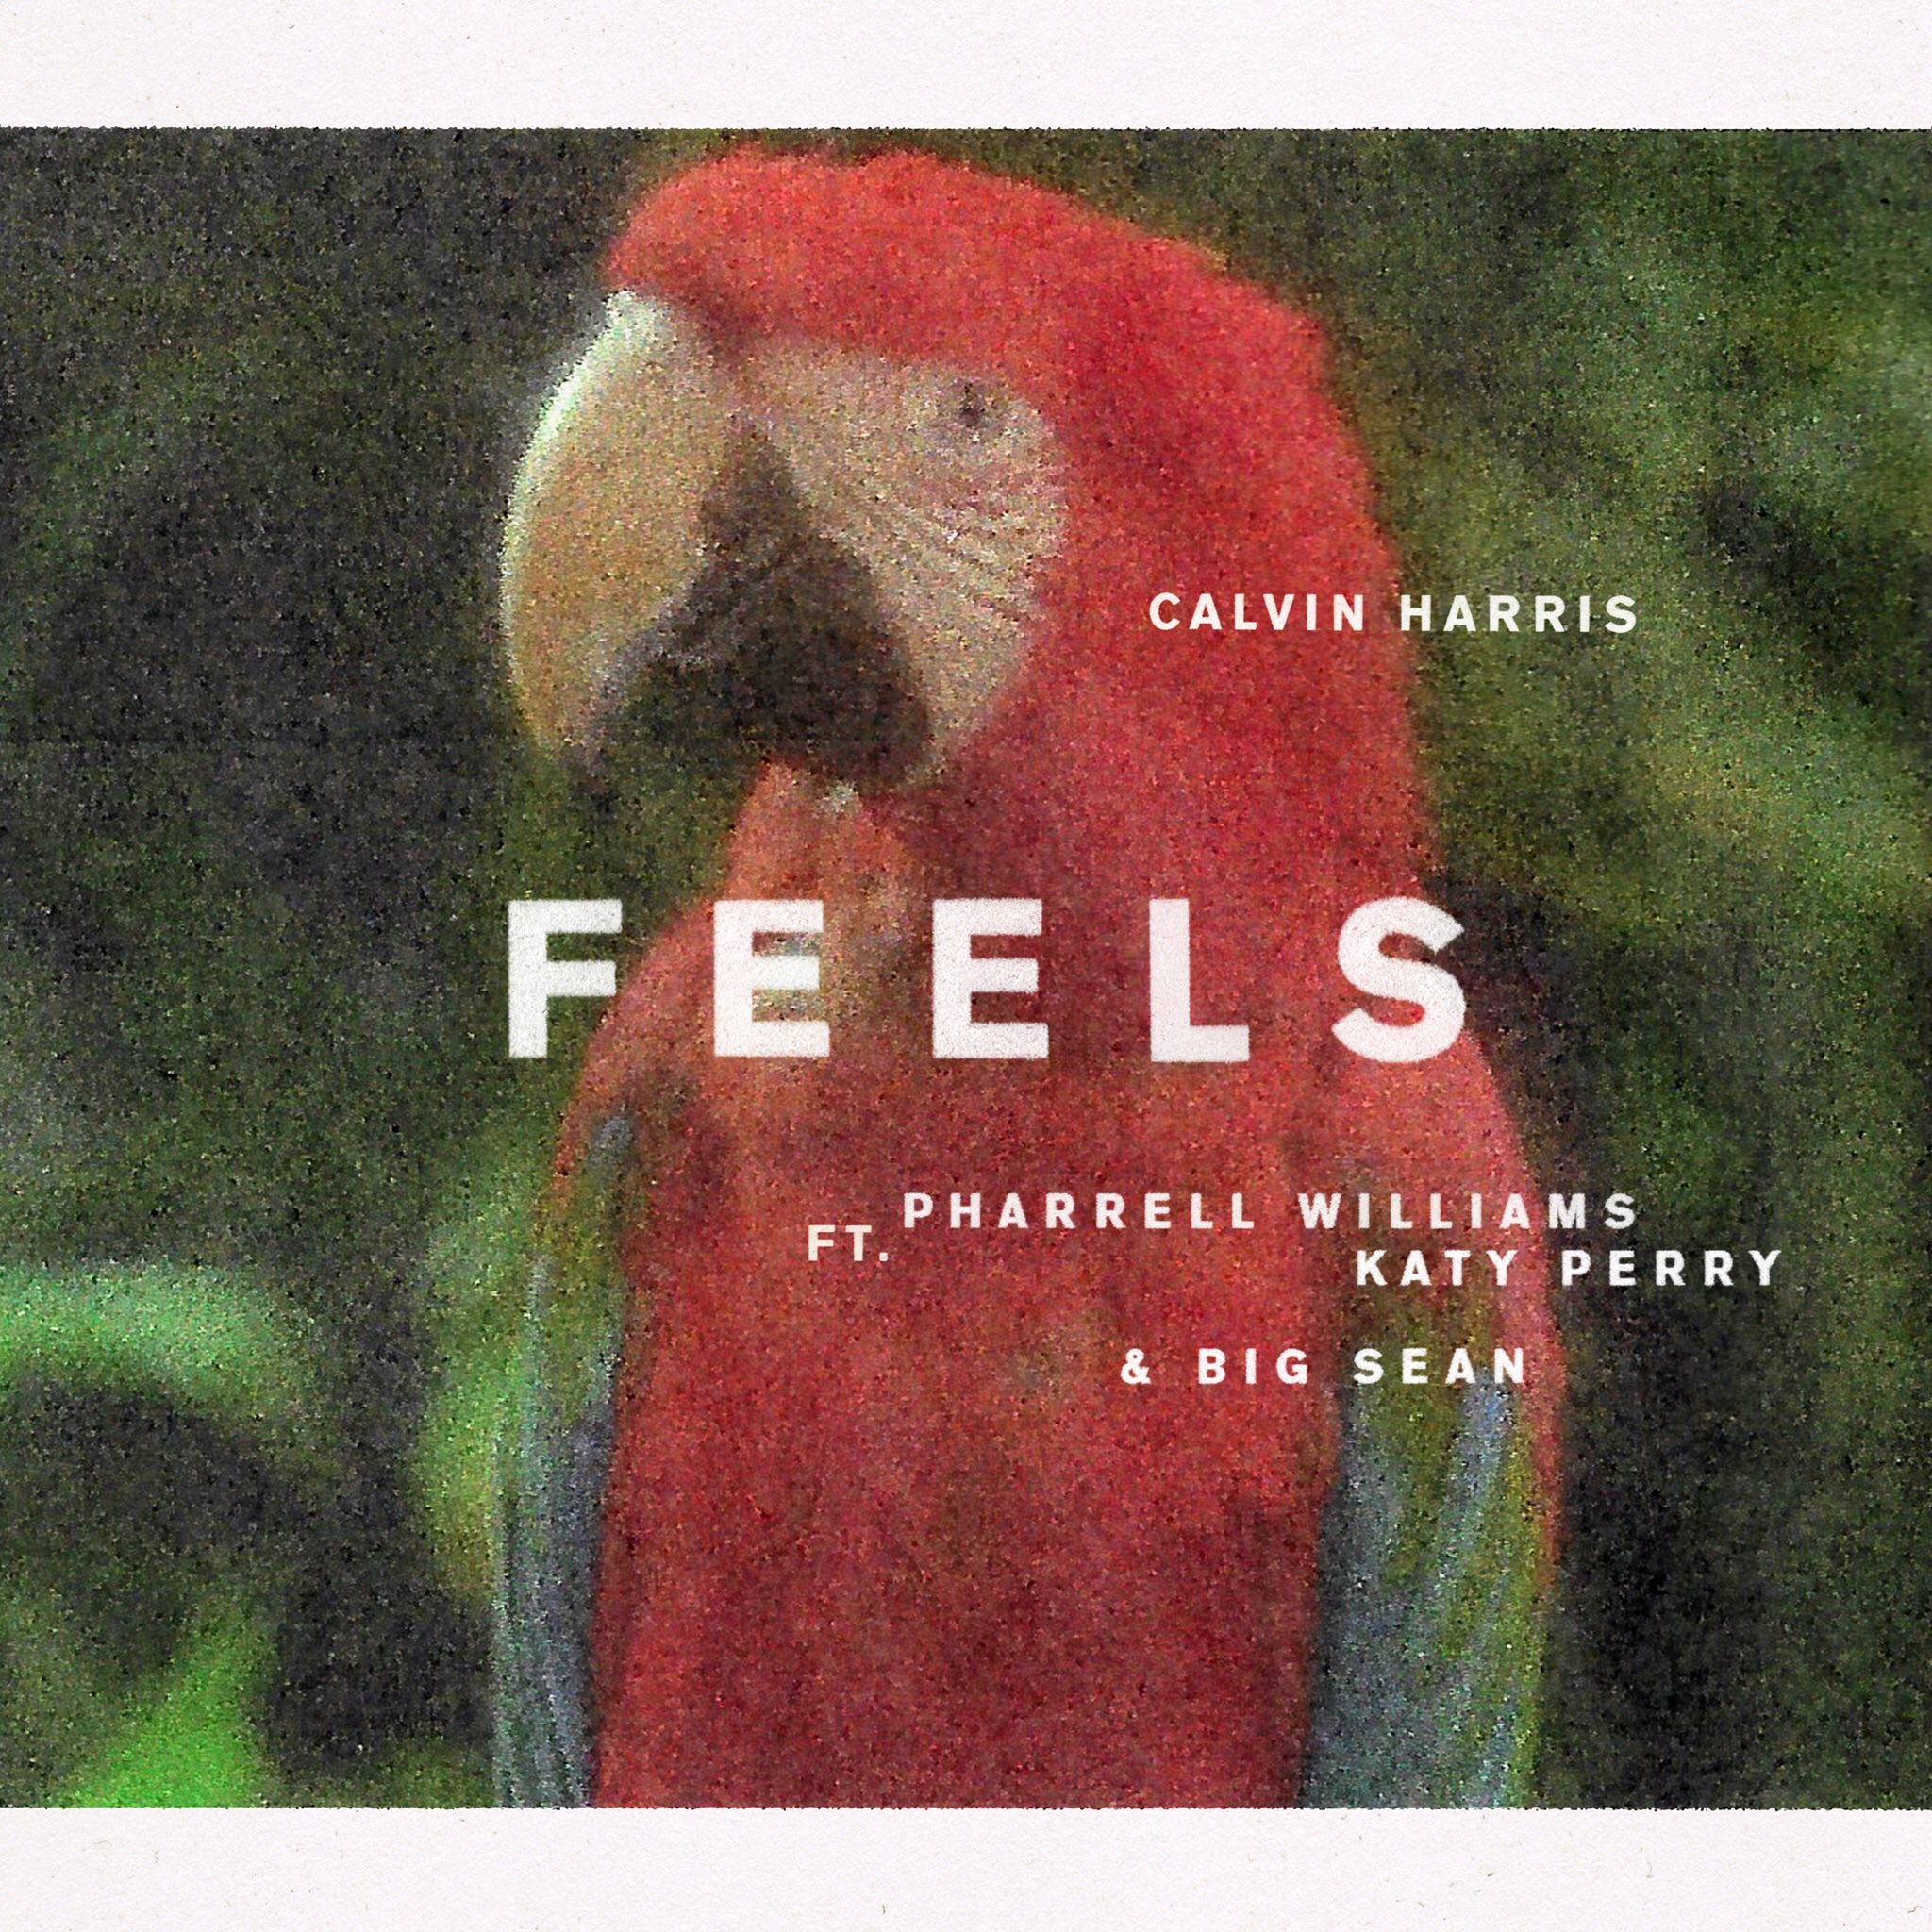 Calvin Harris featuring Pharrell Williams, Katy Perry, & Big Sean — Feels cover artwork